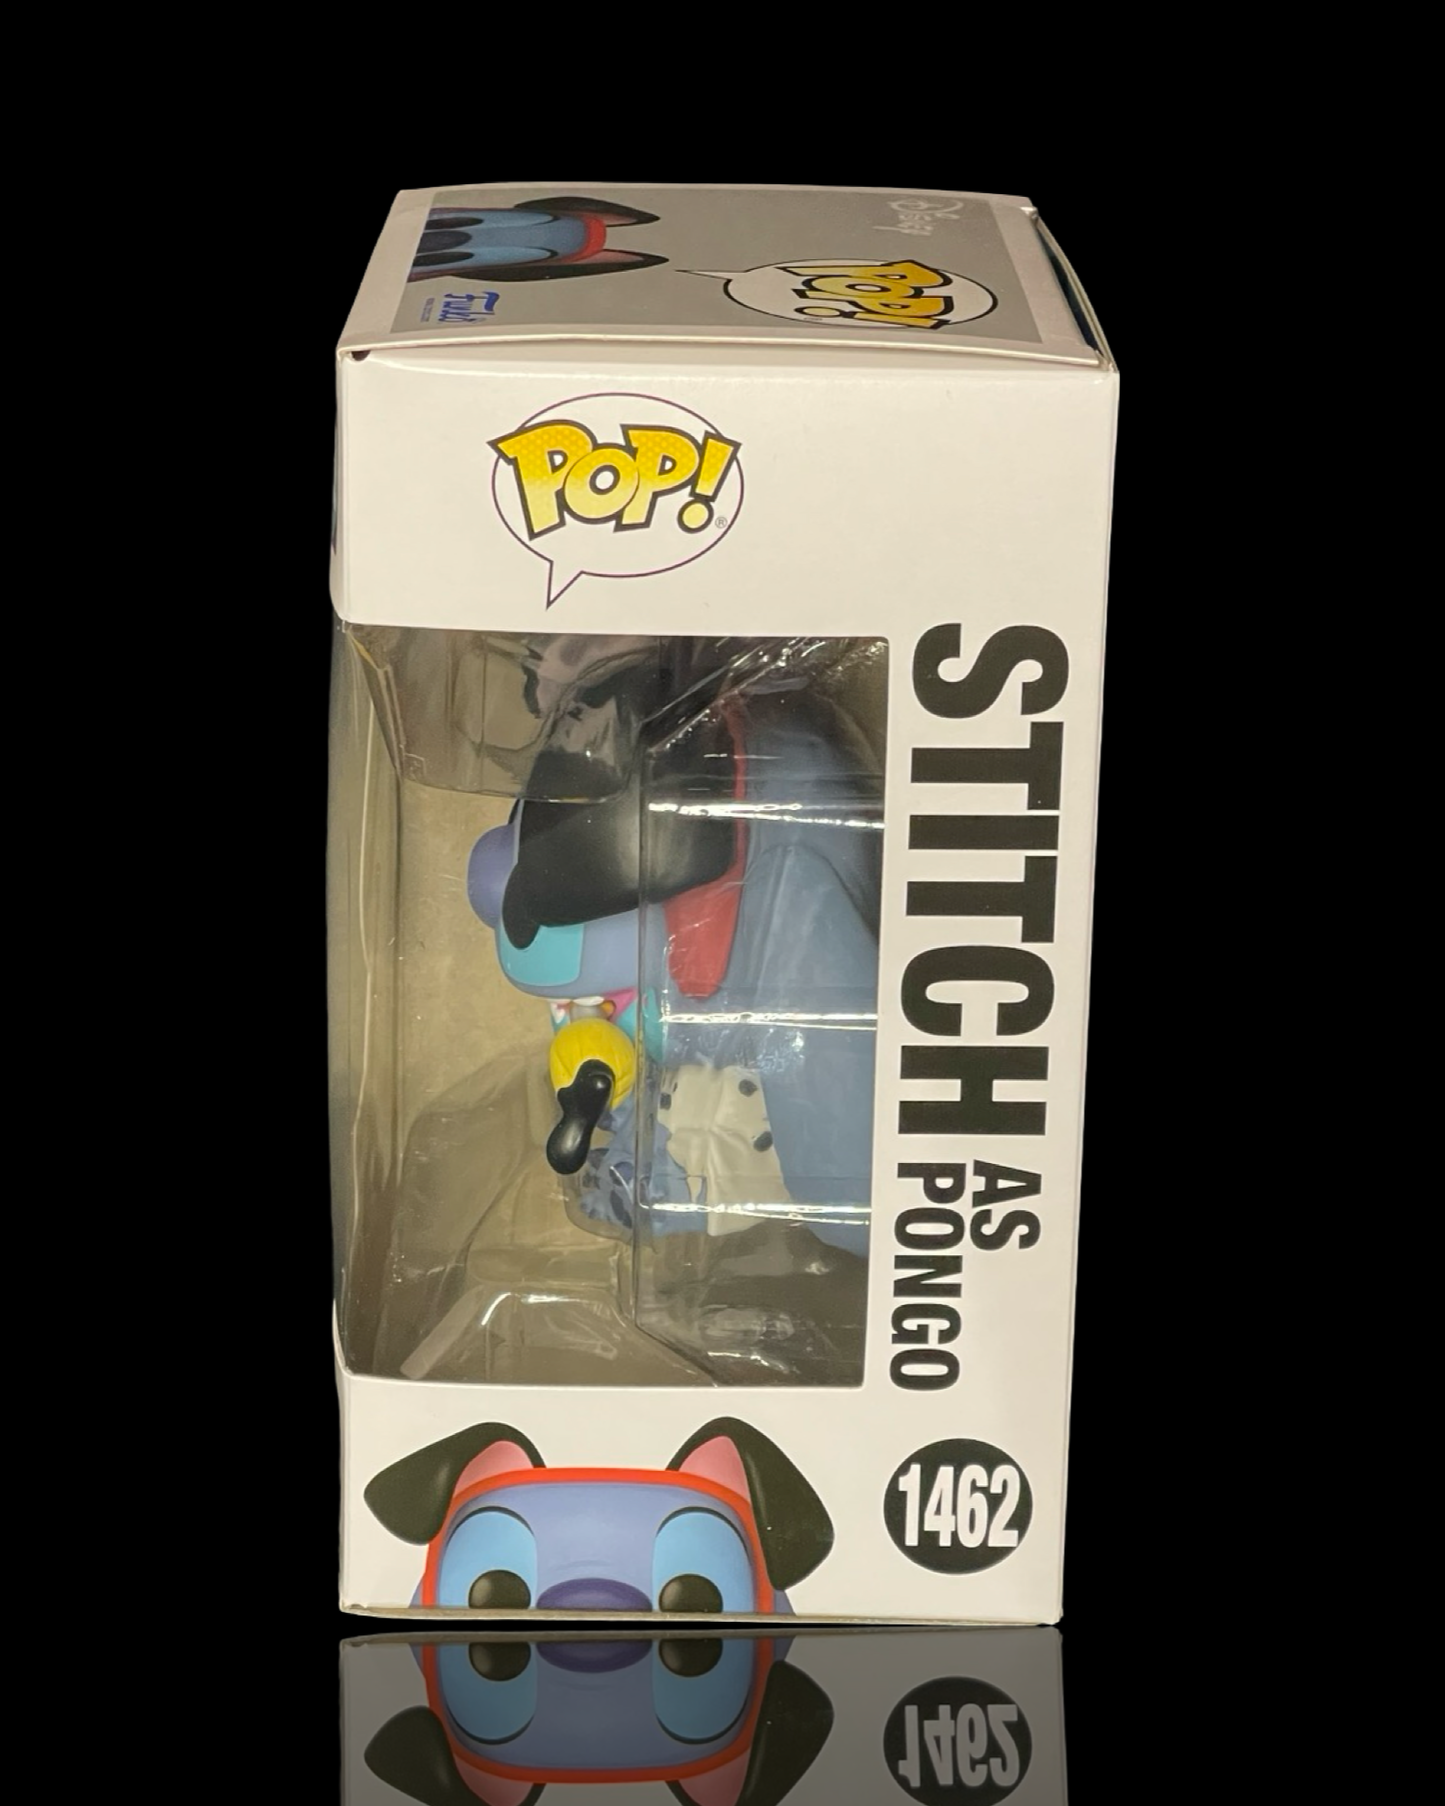 Stitch in Costume: Stitch as Pongo